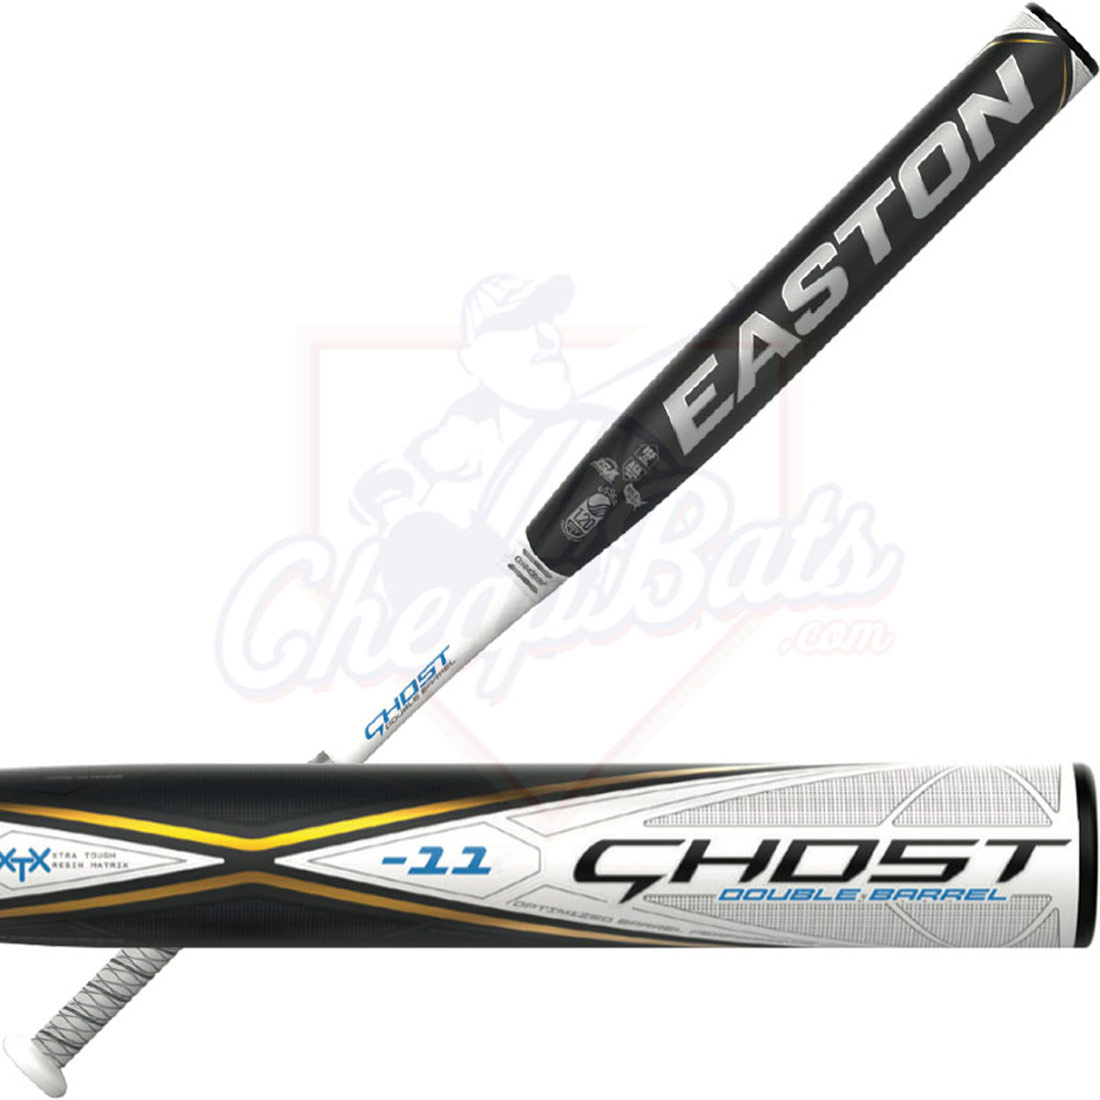 Easton FP20GH11 Fastpitch Softball Bat for sale online 